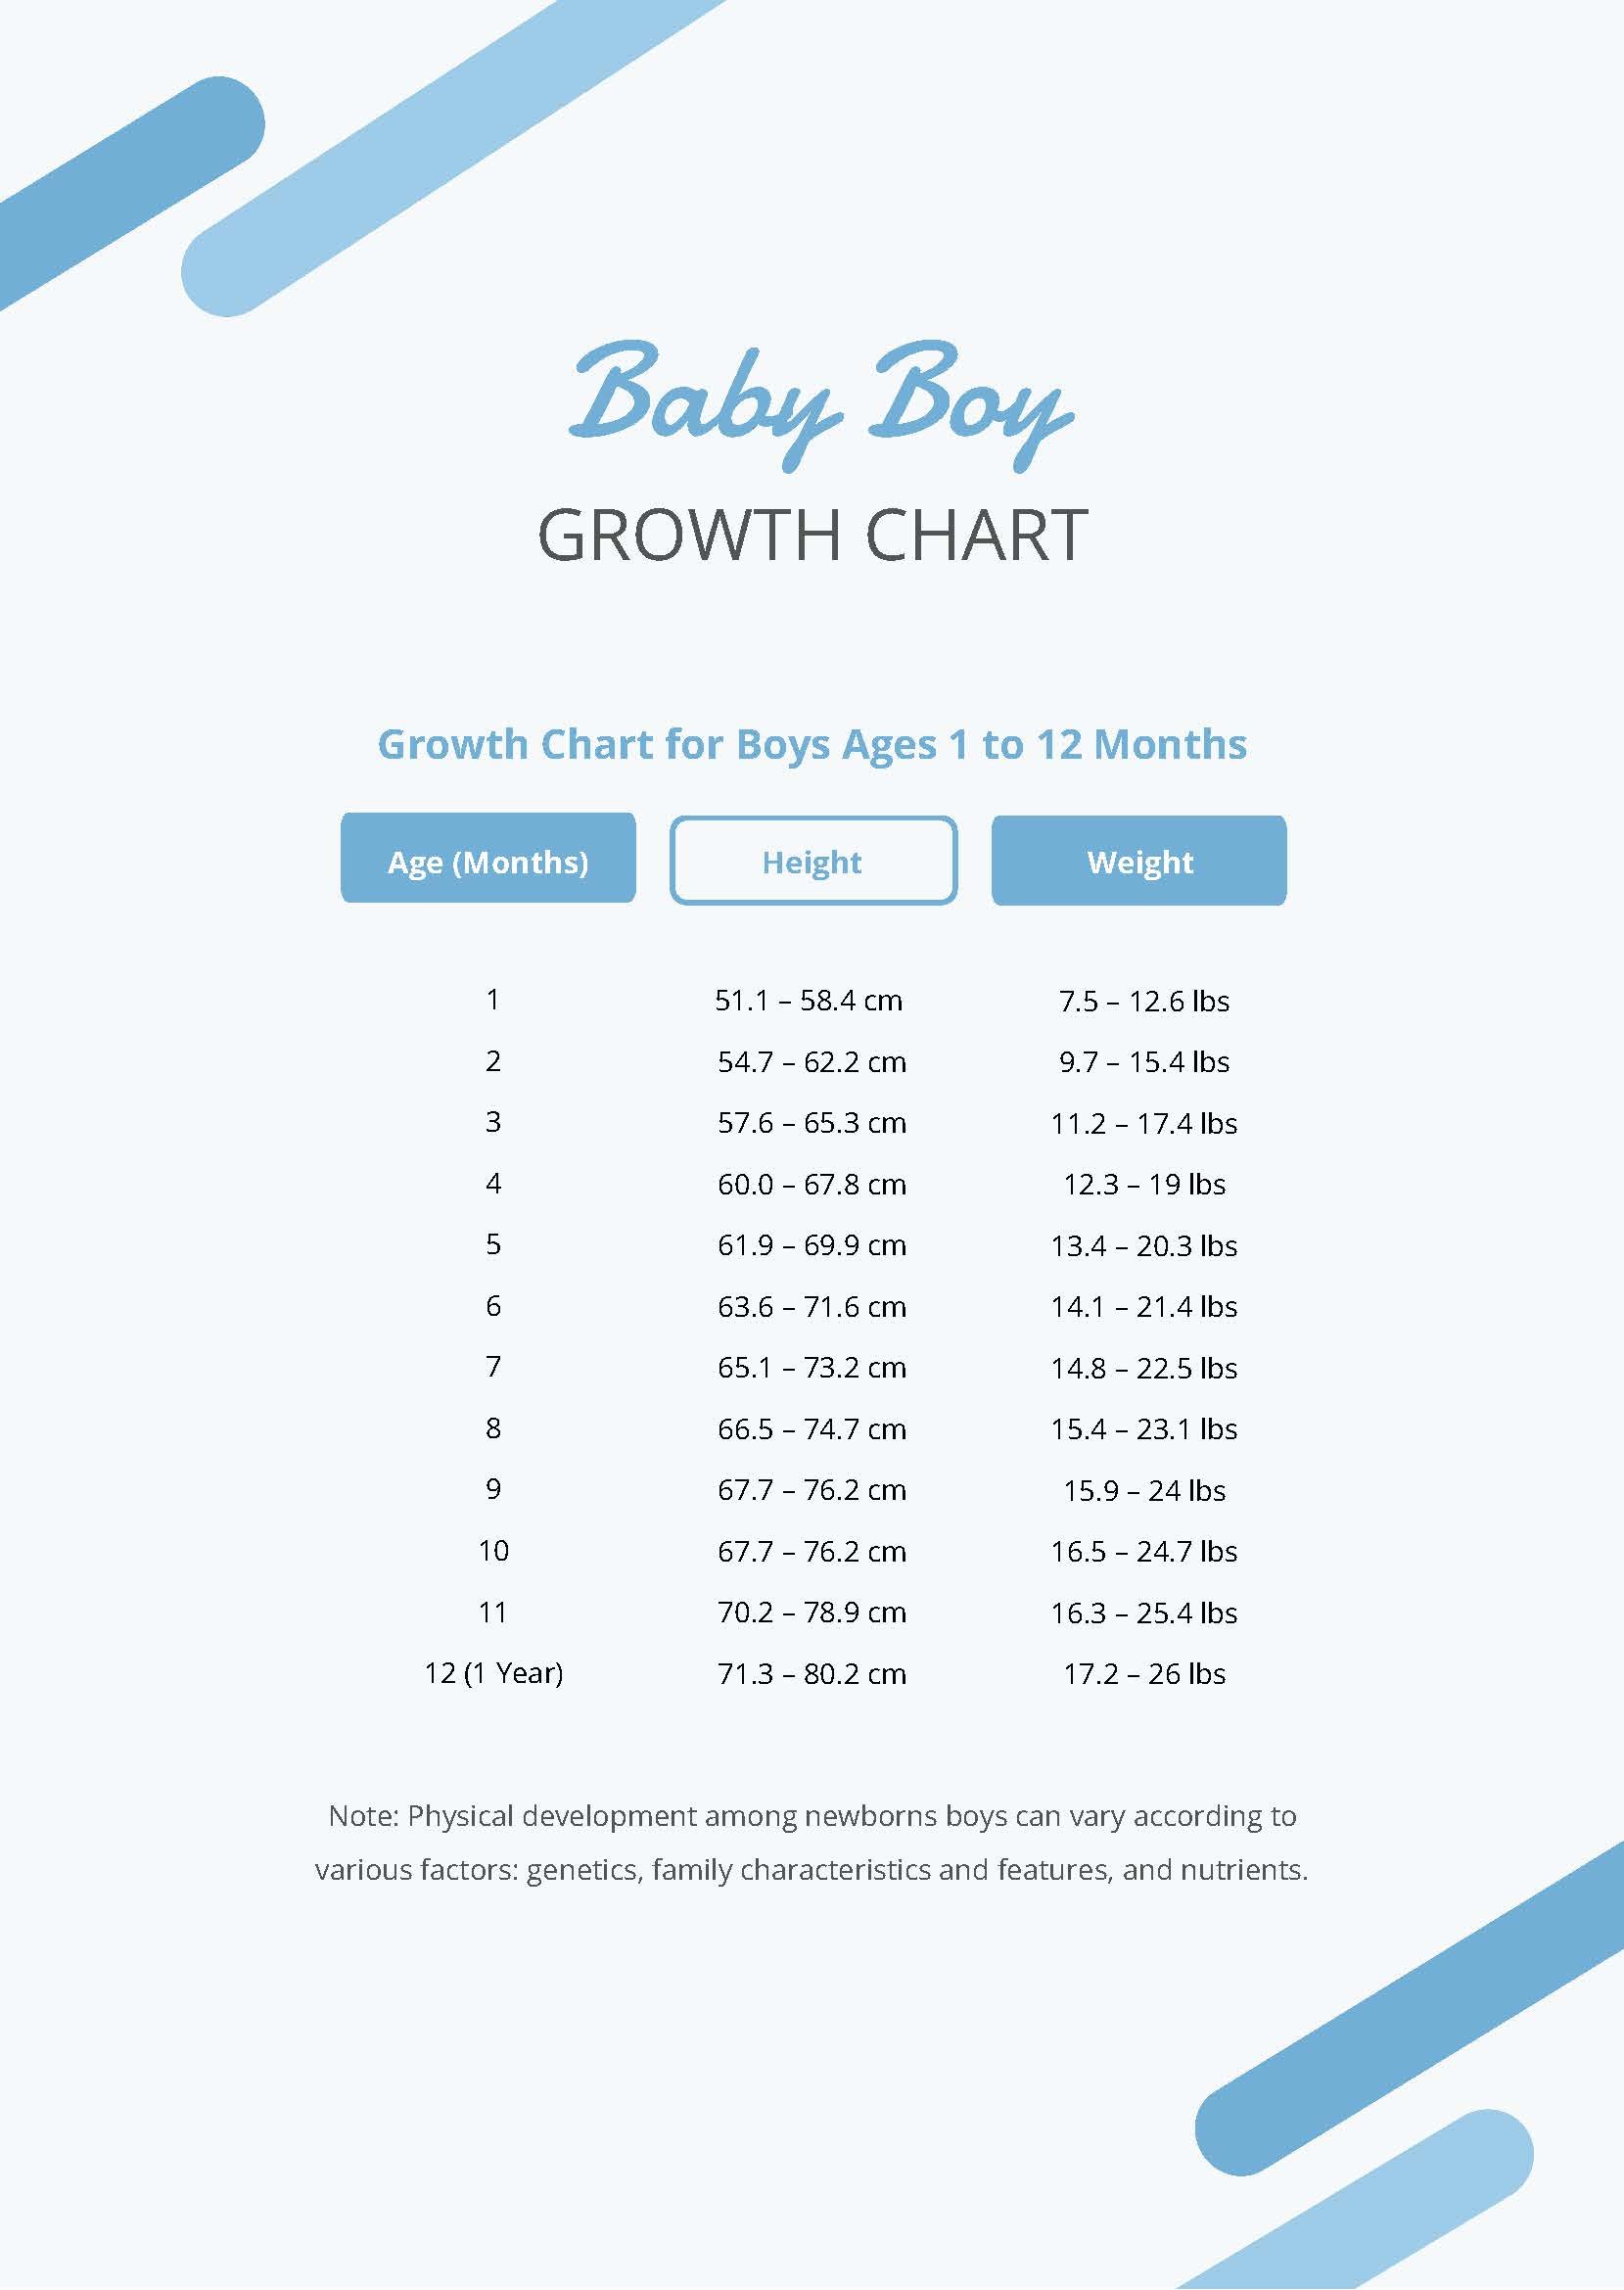 Baby Boy Growth Chart in PDF